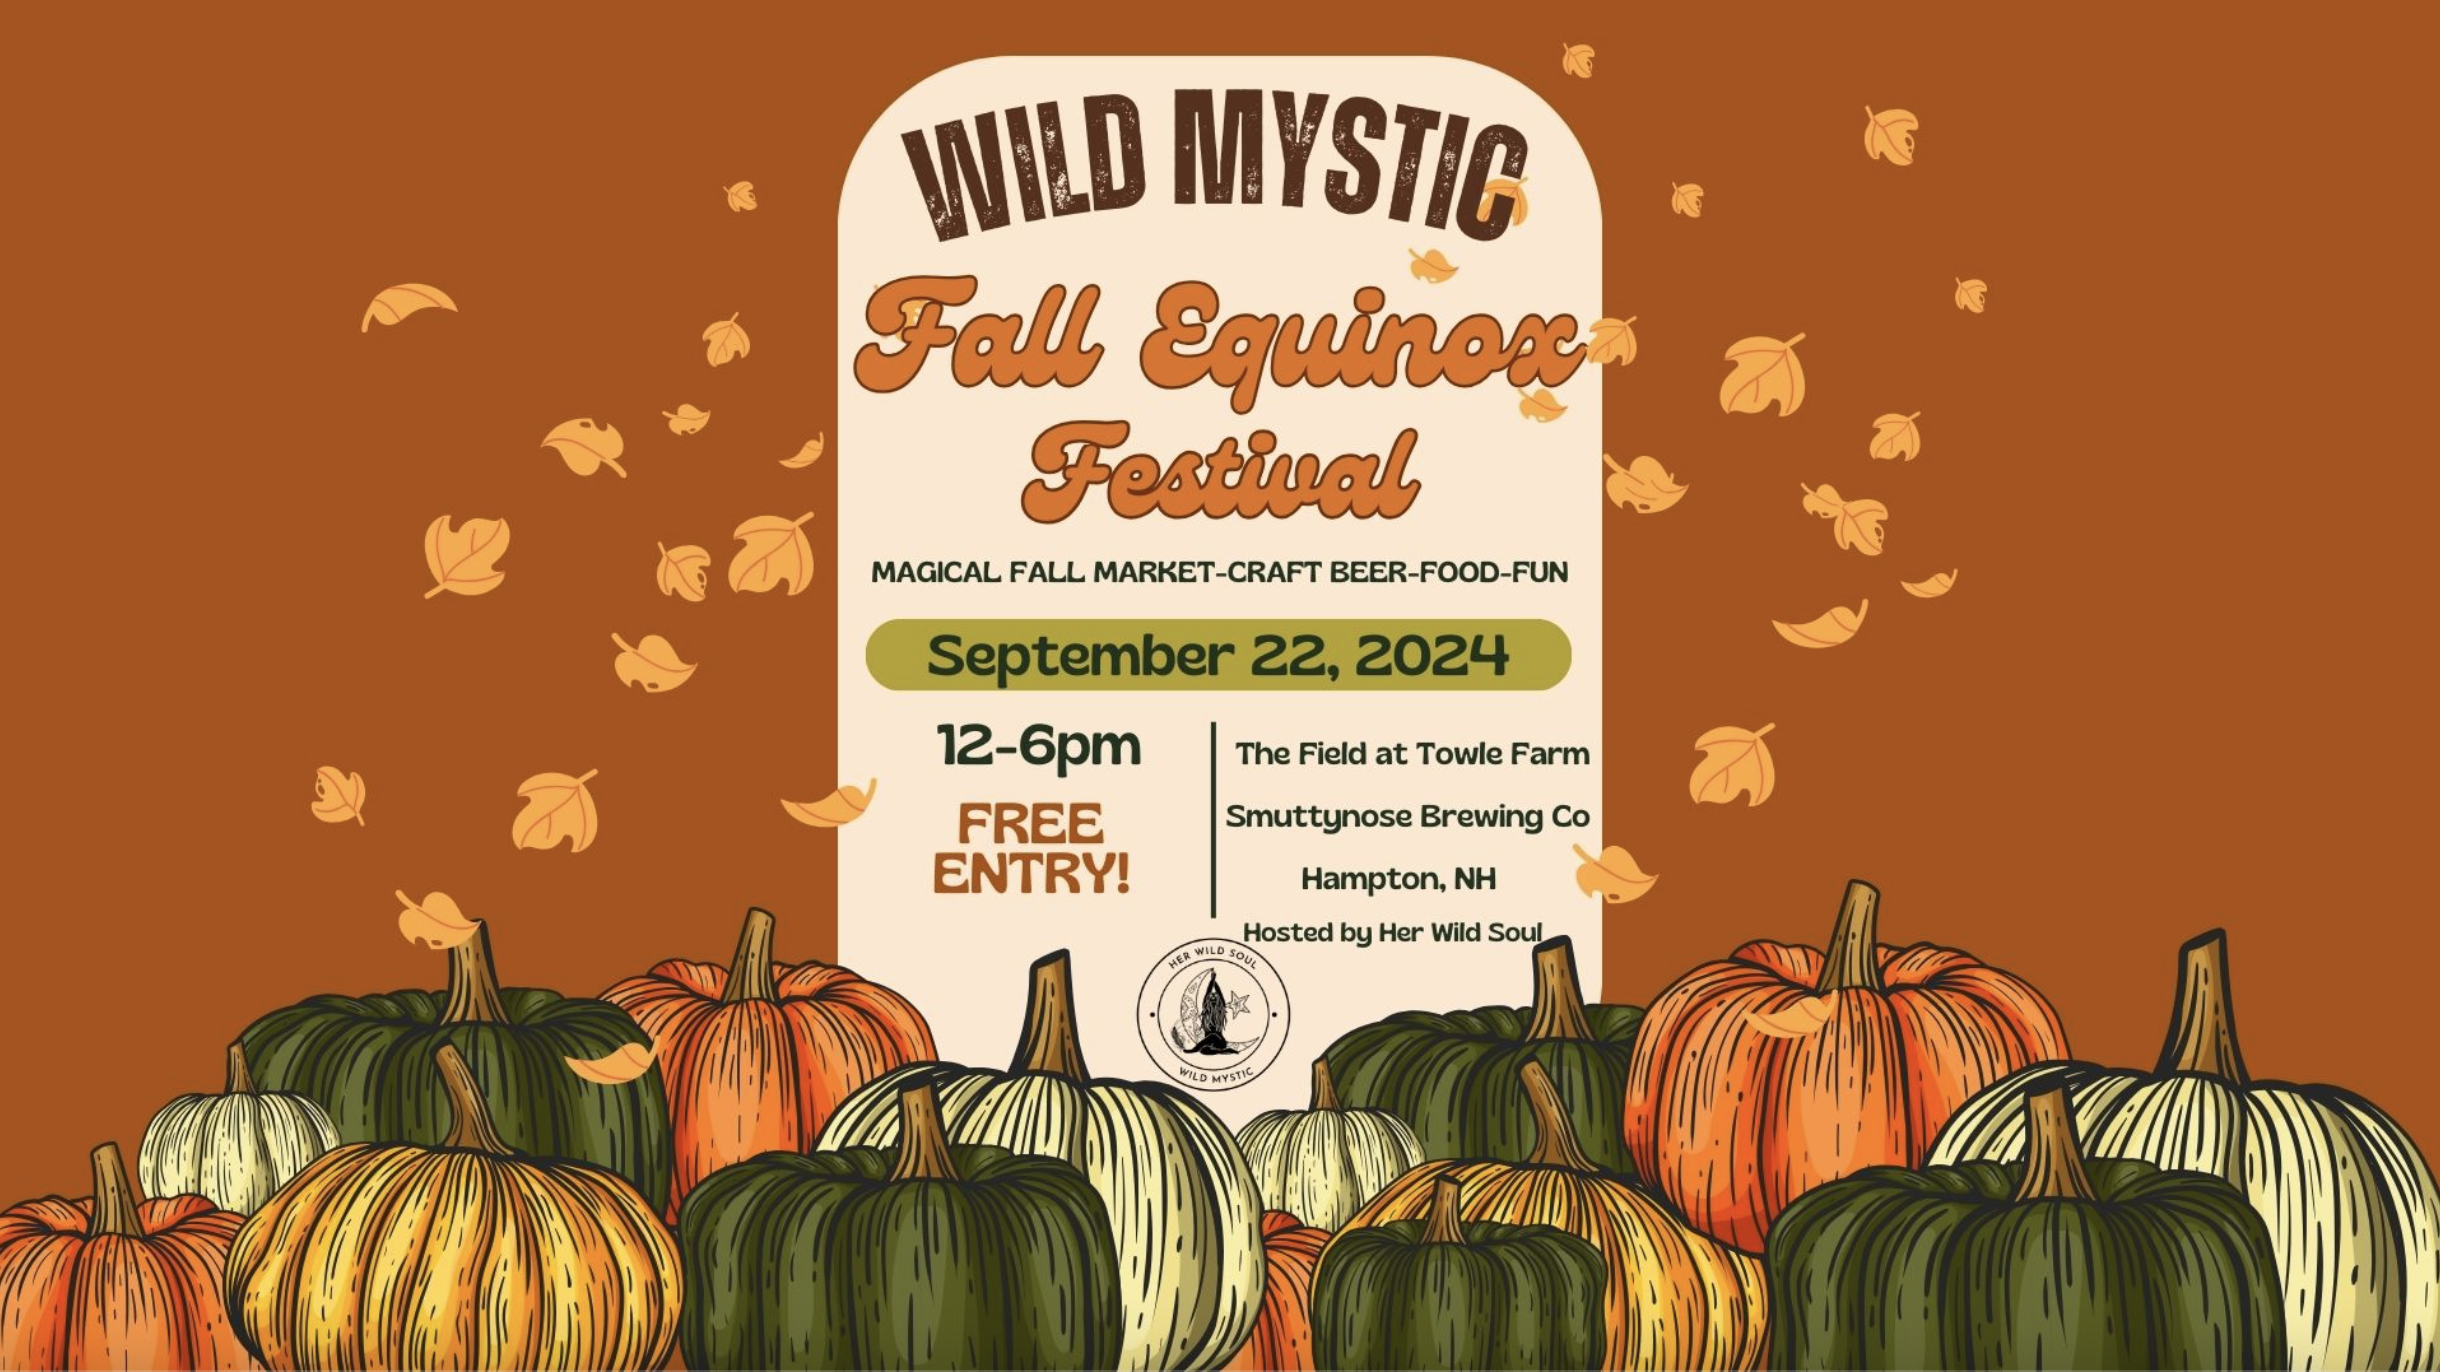 Wild Mystic Fall Equinox Festival